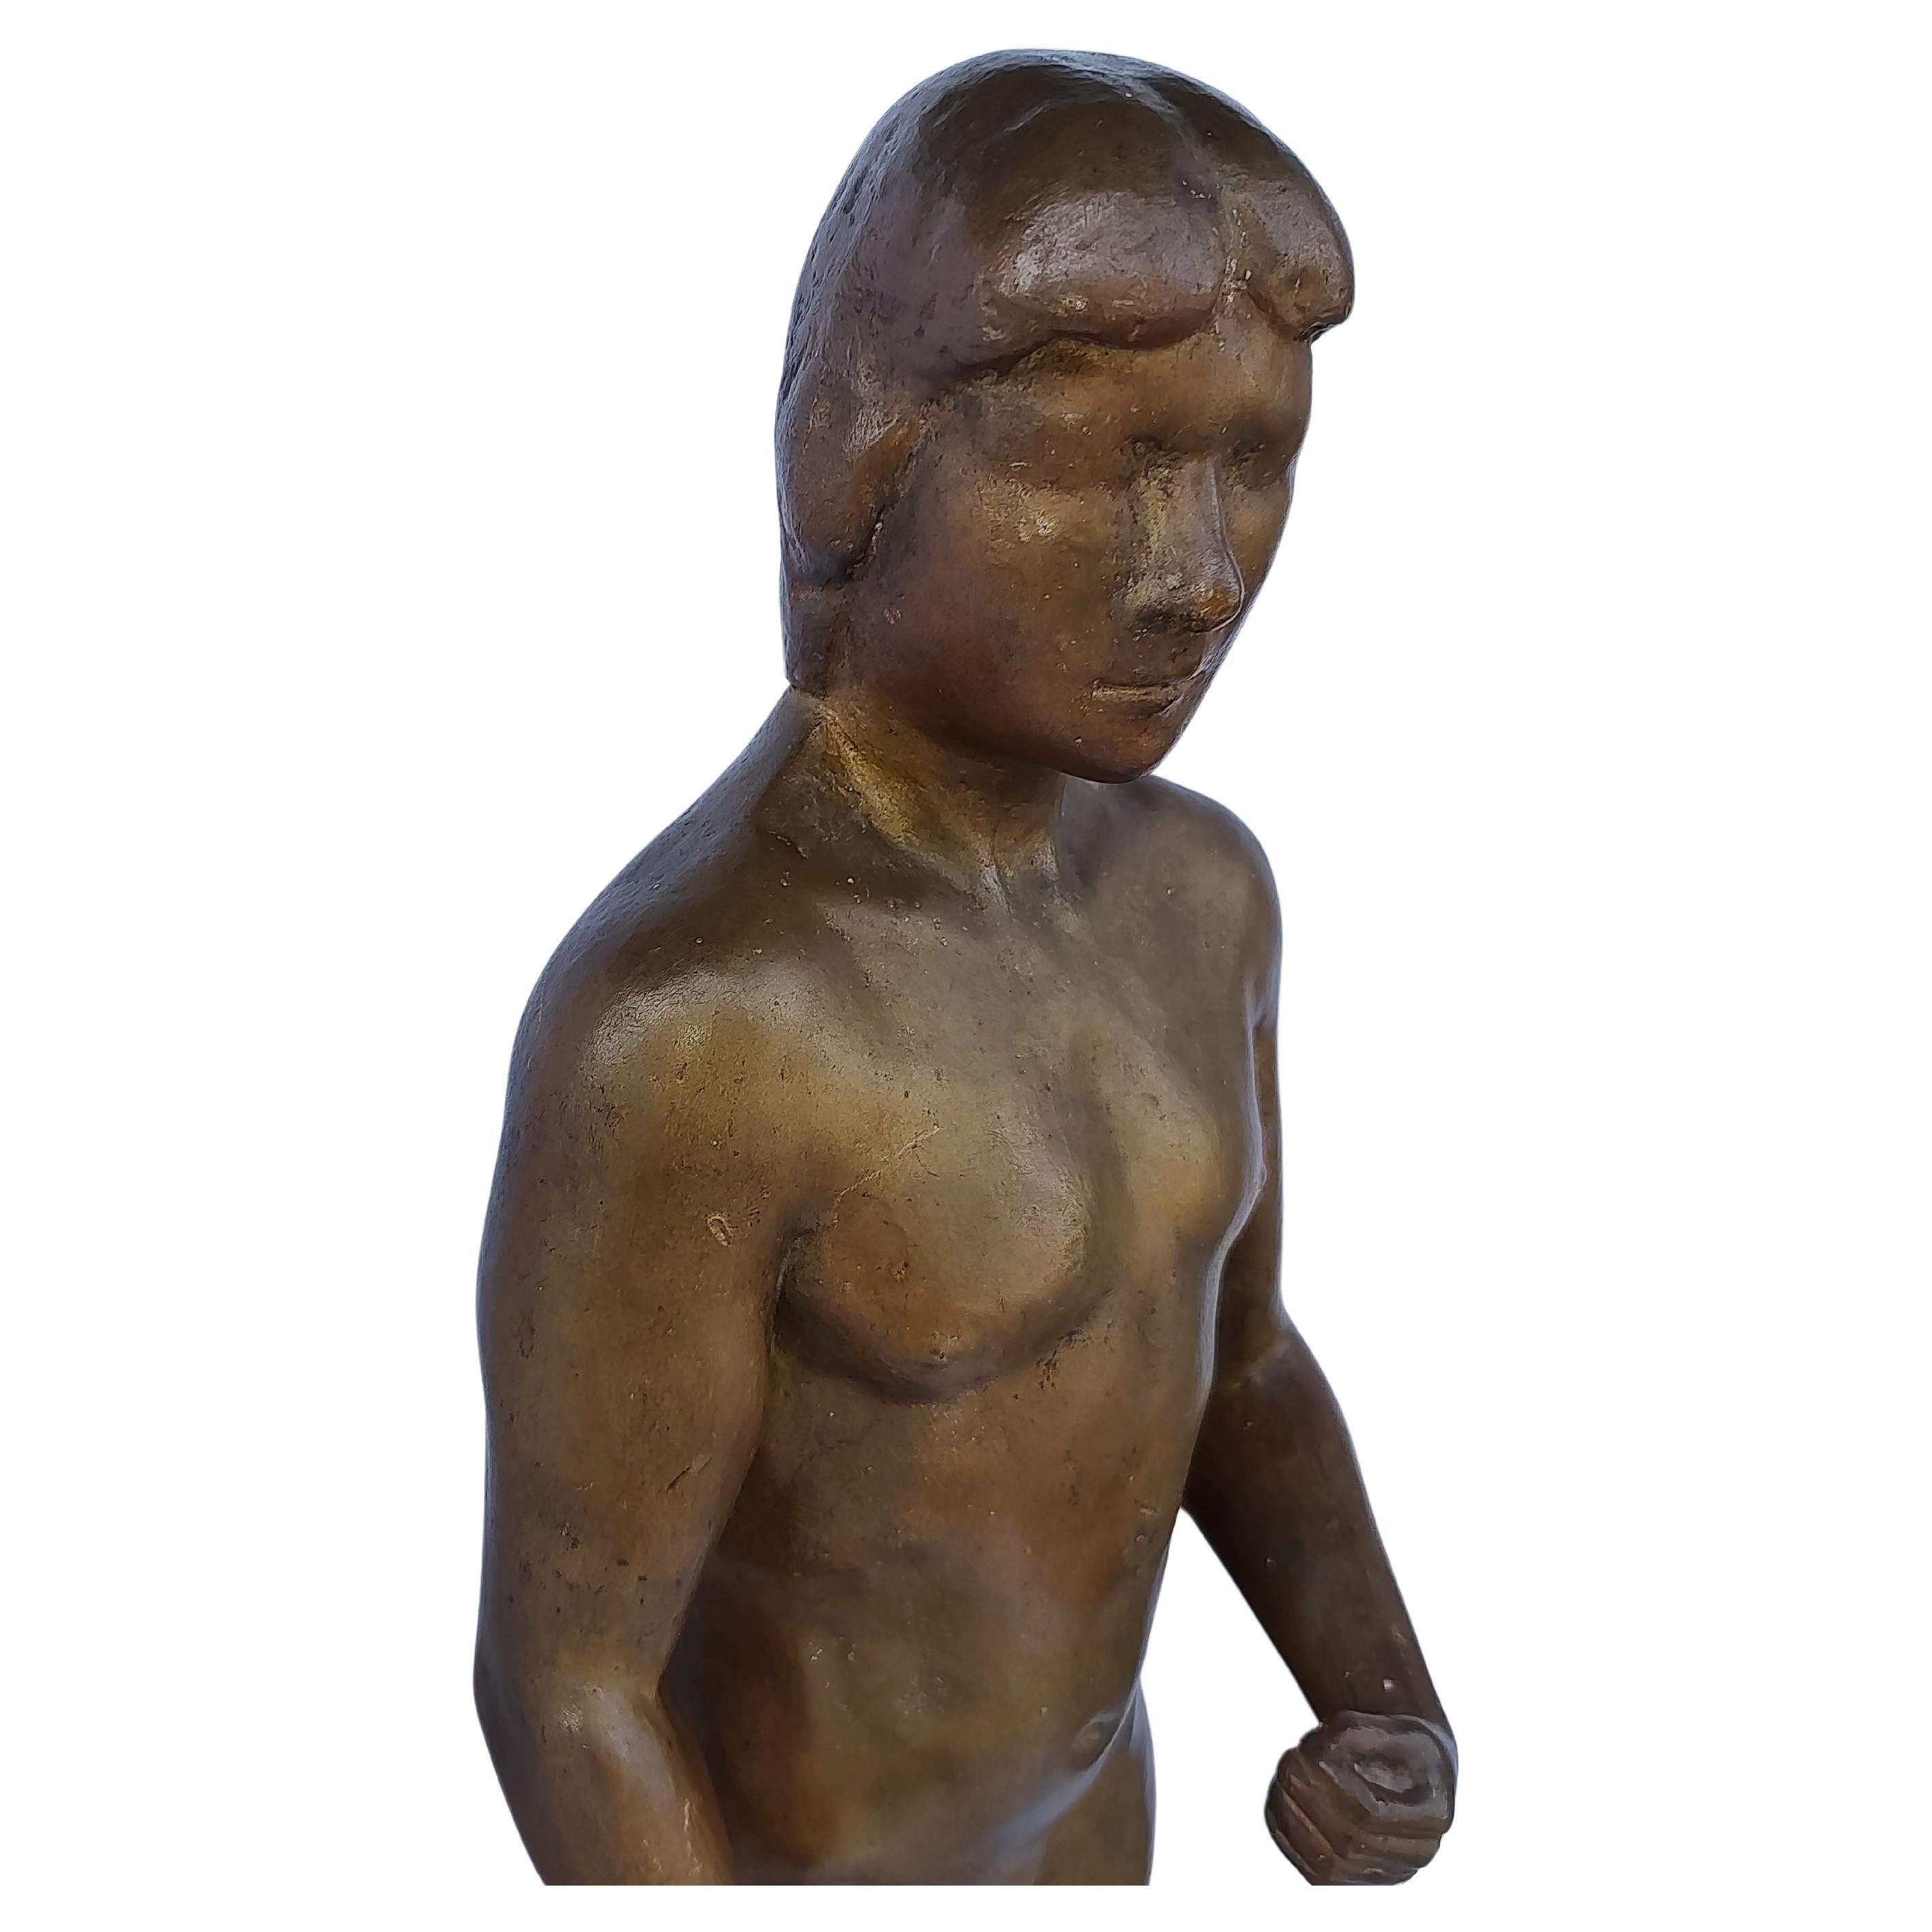 Européen Sculpture en bronze du milieu du siècle dernier d'un nu masculin de la fonderie Guss Barth Rinteen en vente